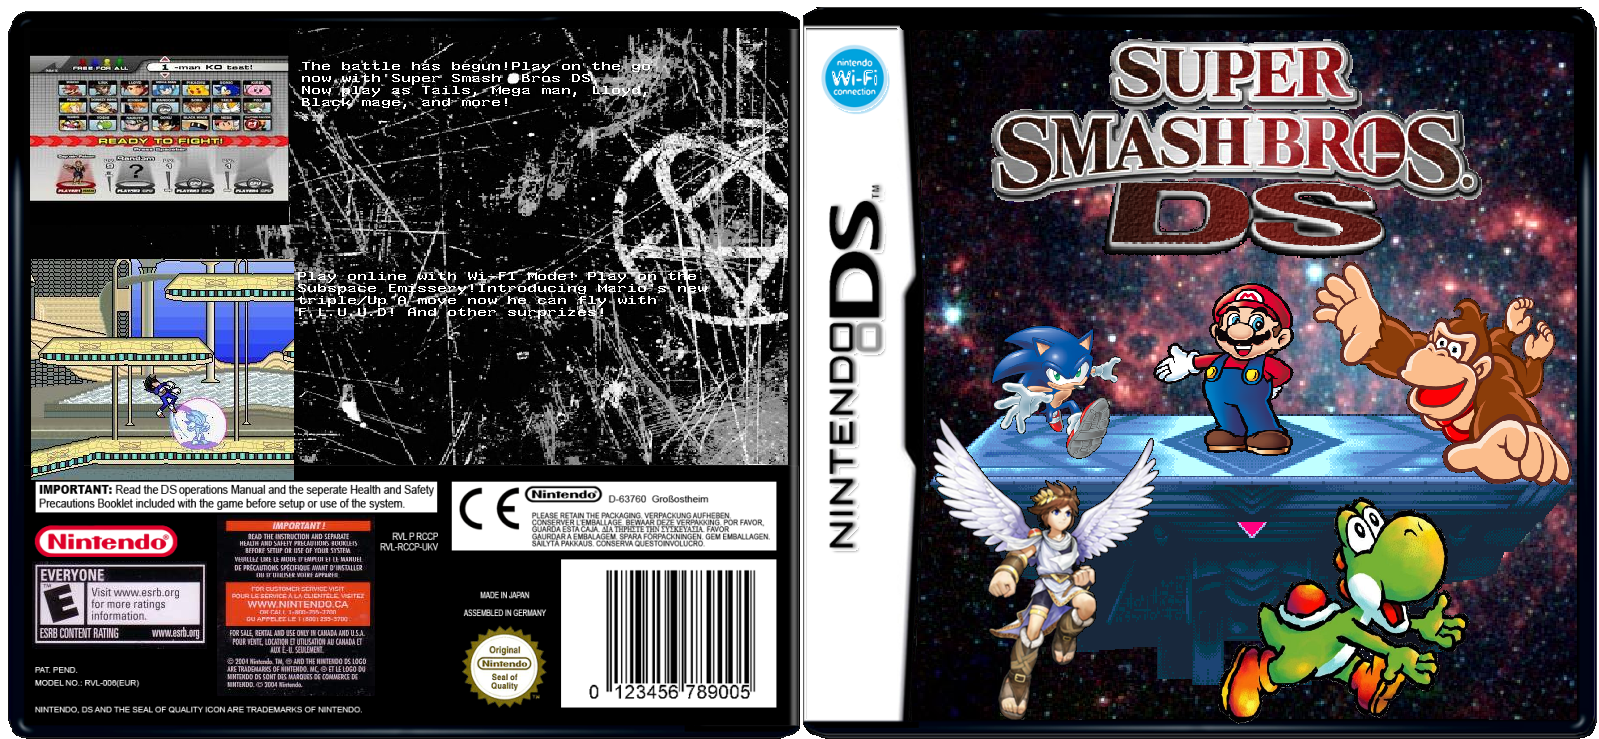 Super Smash Bros Ds box cover